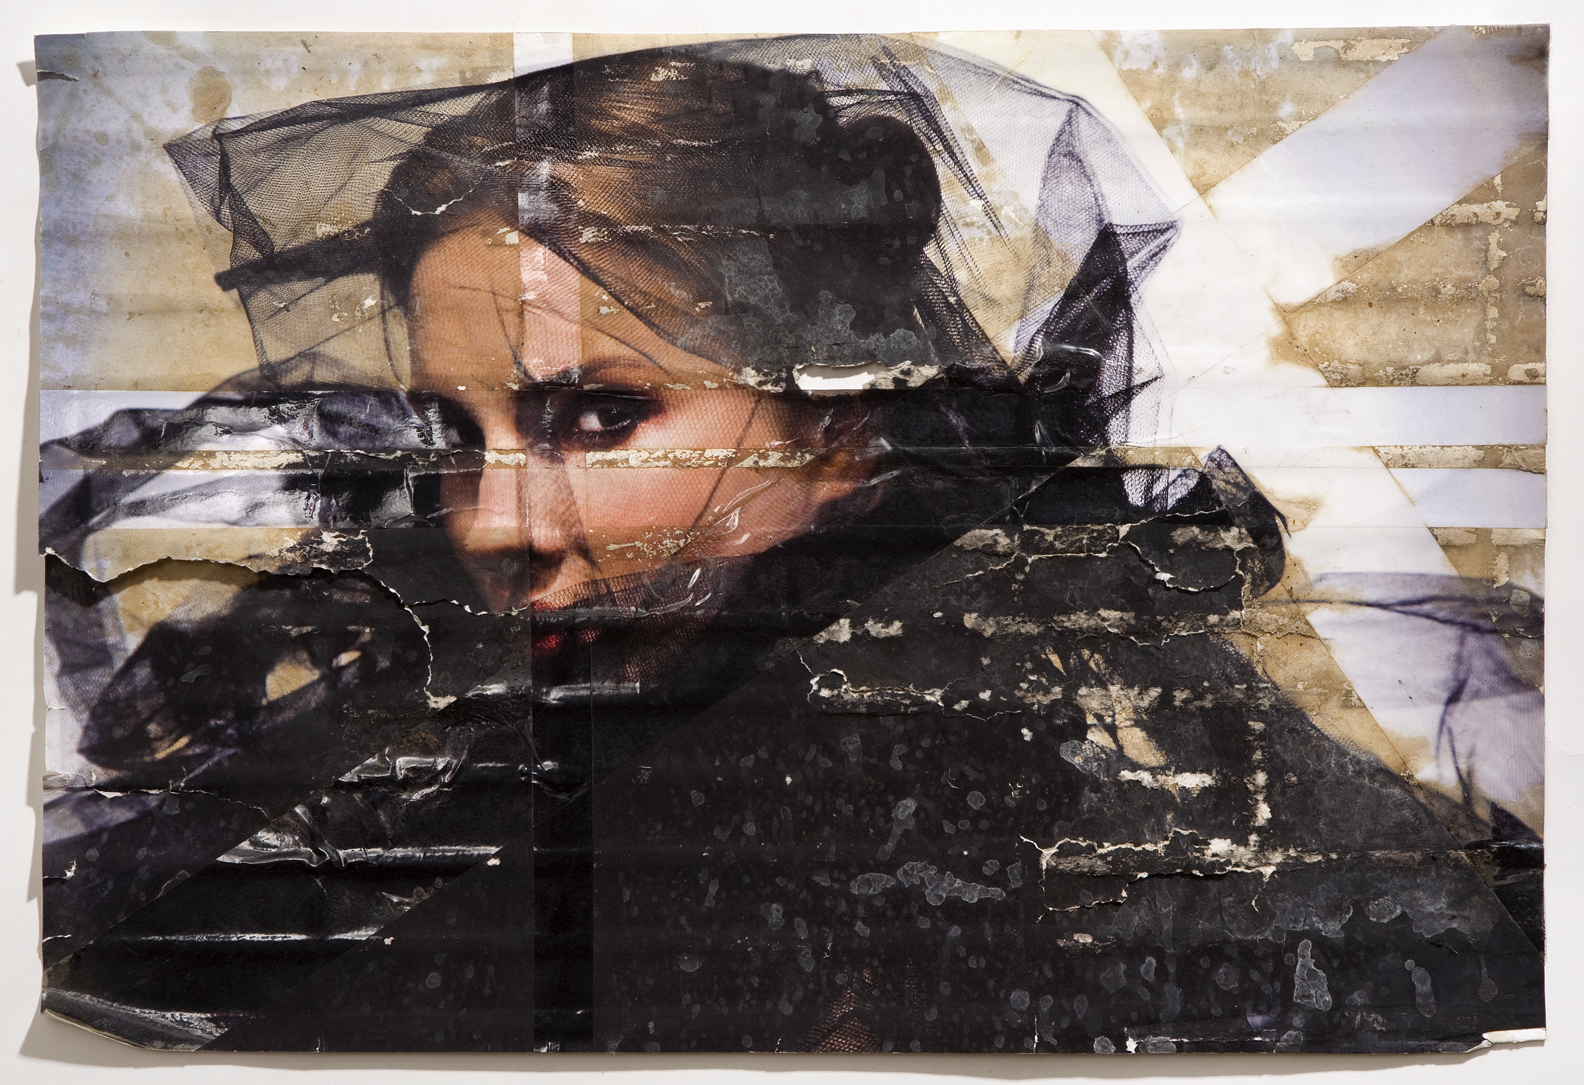 Olga, inkjet print, packing tape, coffee, coffee grounds, milk, 13"x19", 2010